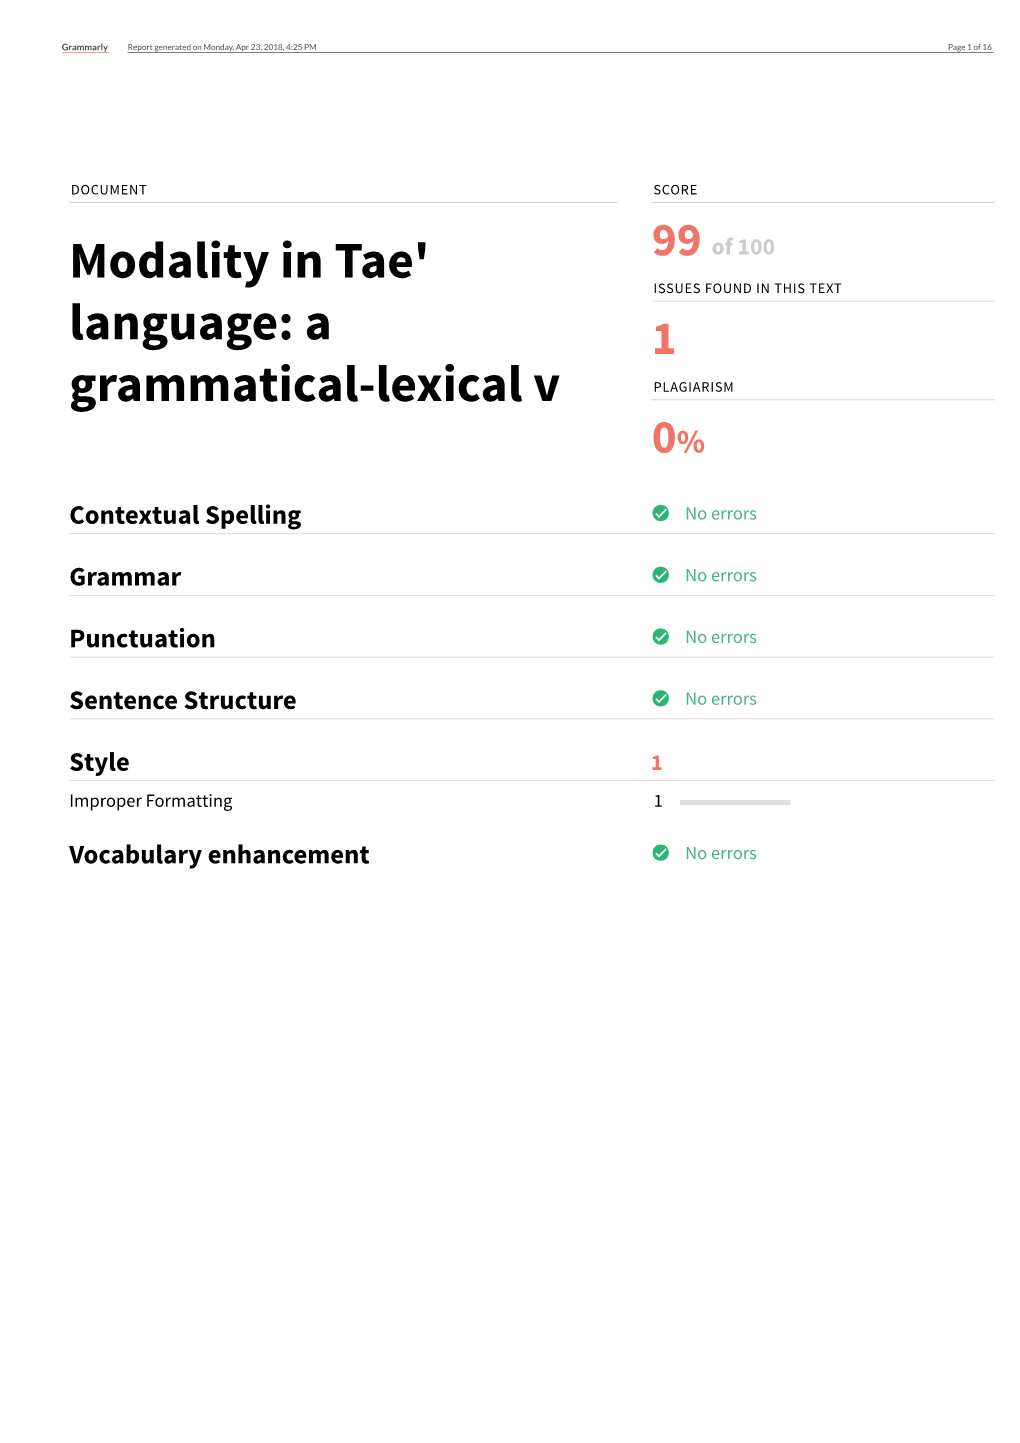 Modality in Tae' Language: a Grammatical-Lexical V